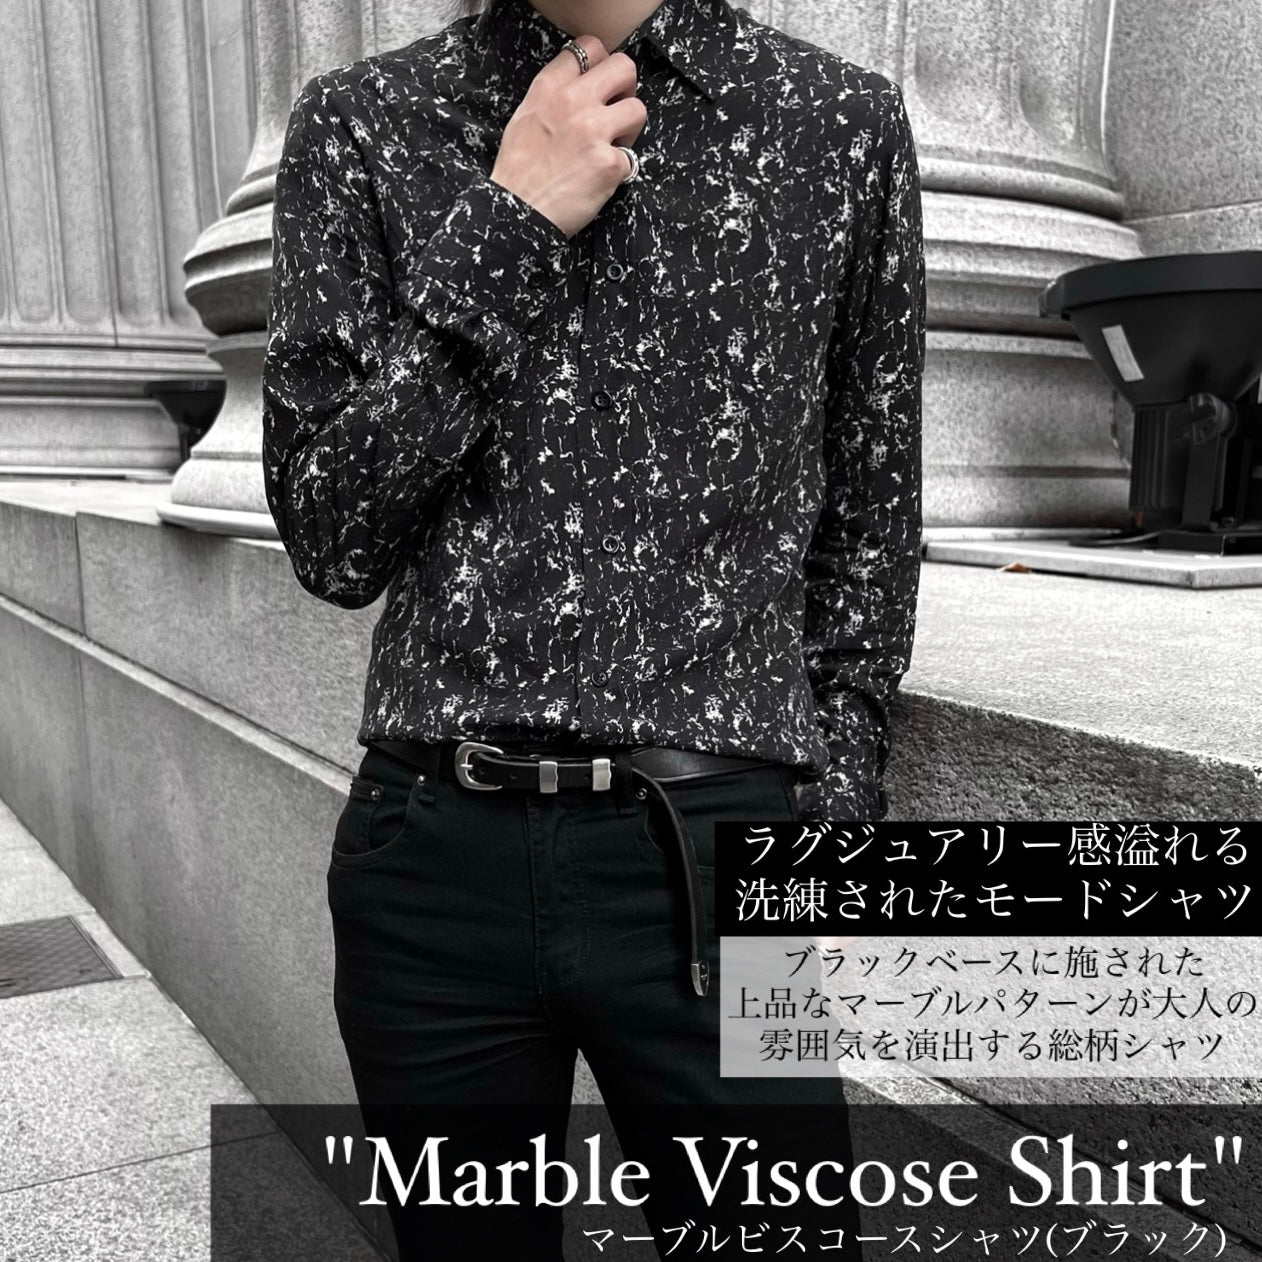 PANERO Marble Viscose shirt S size